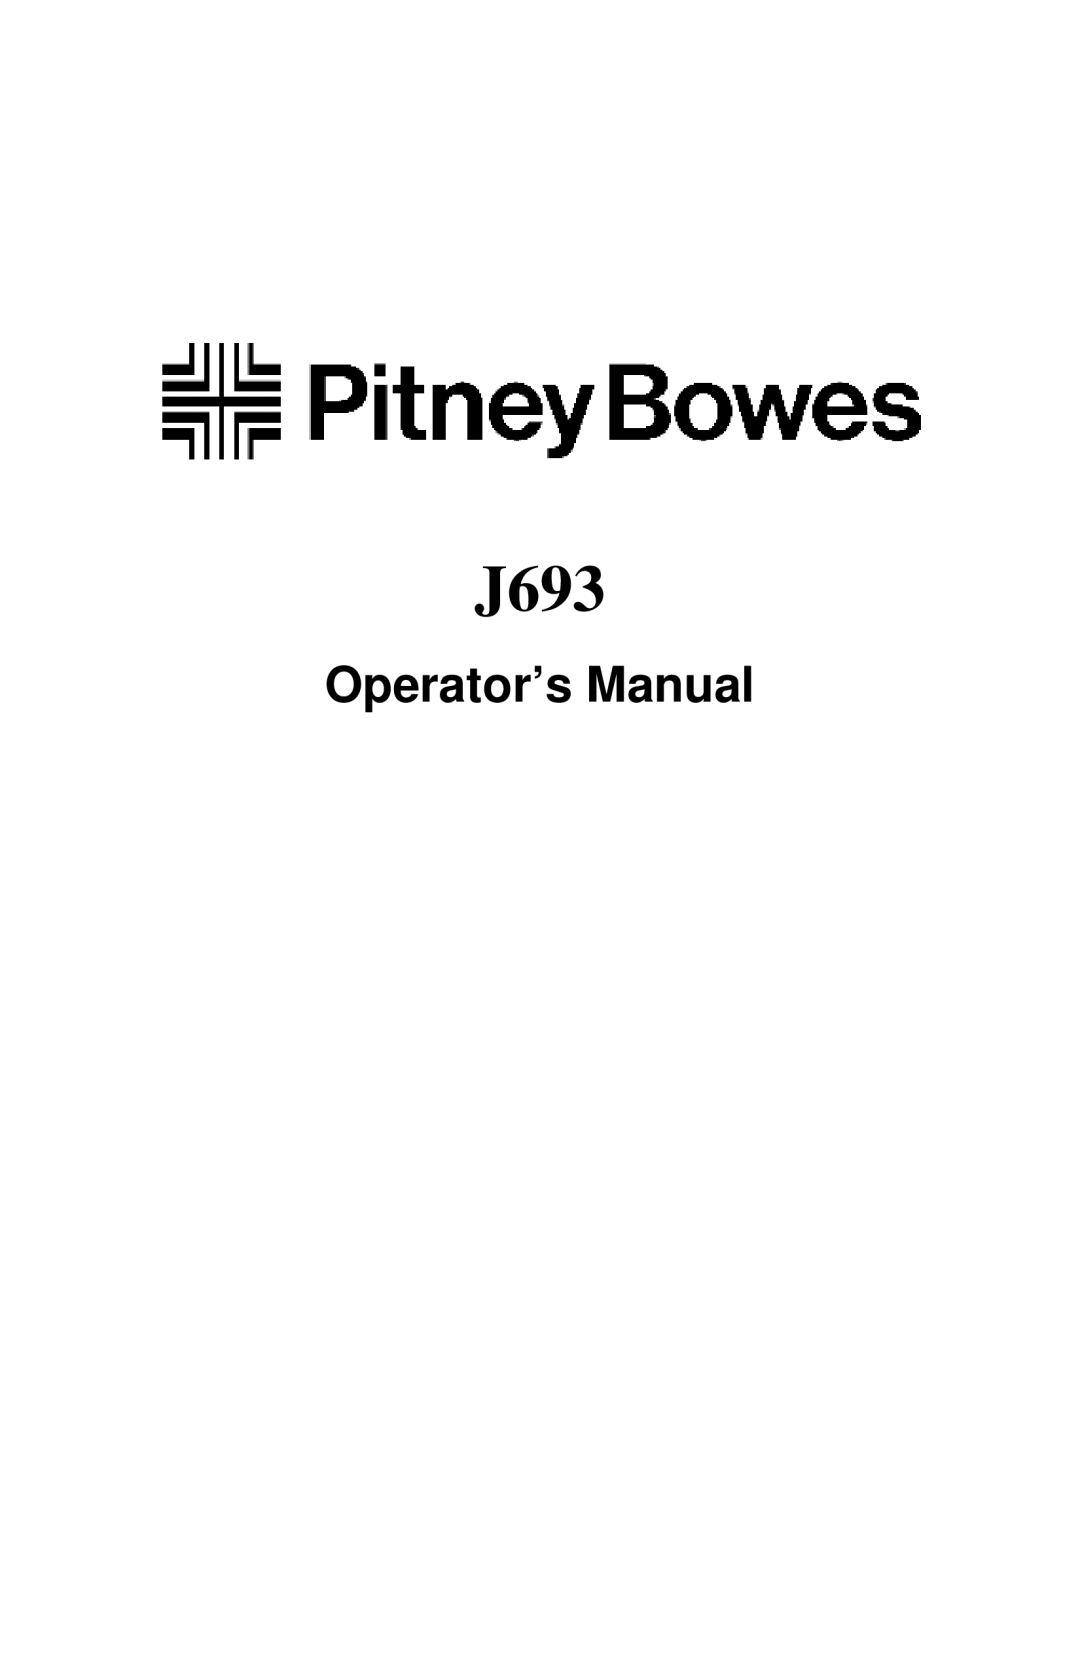 Pitney Bowes J693 manual Operator’s Manual 